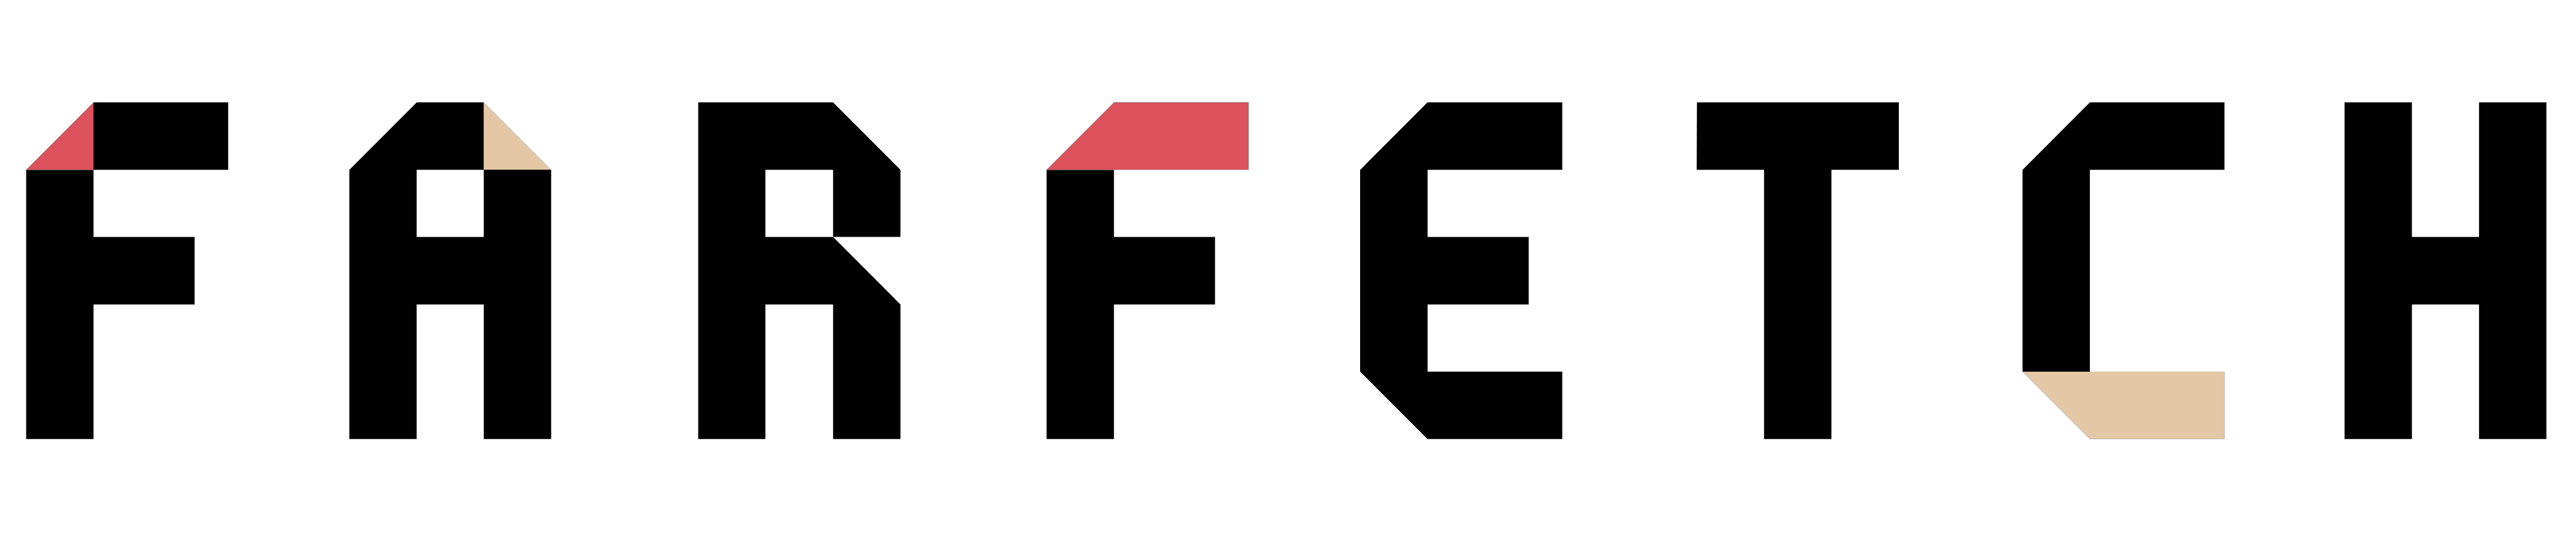 Farfetch_logo_logotype